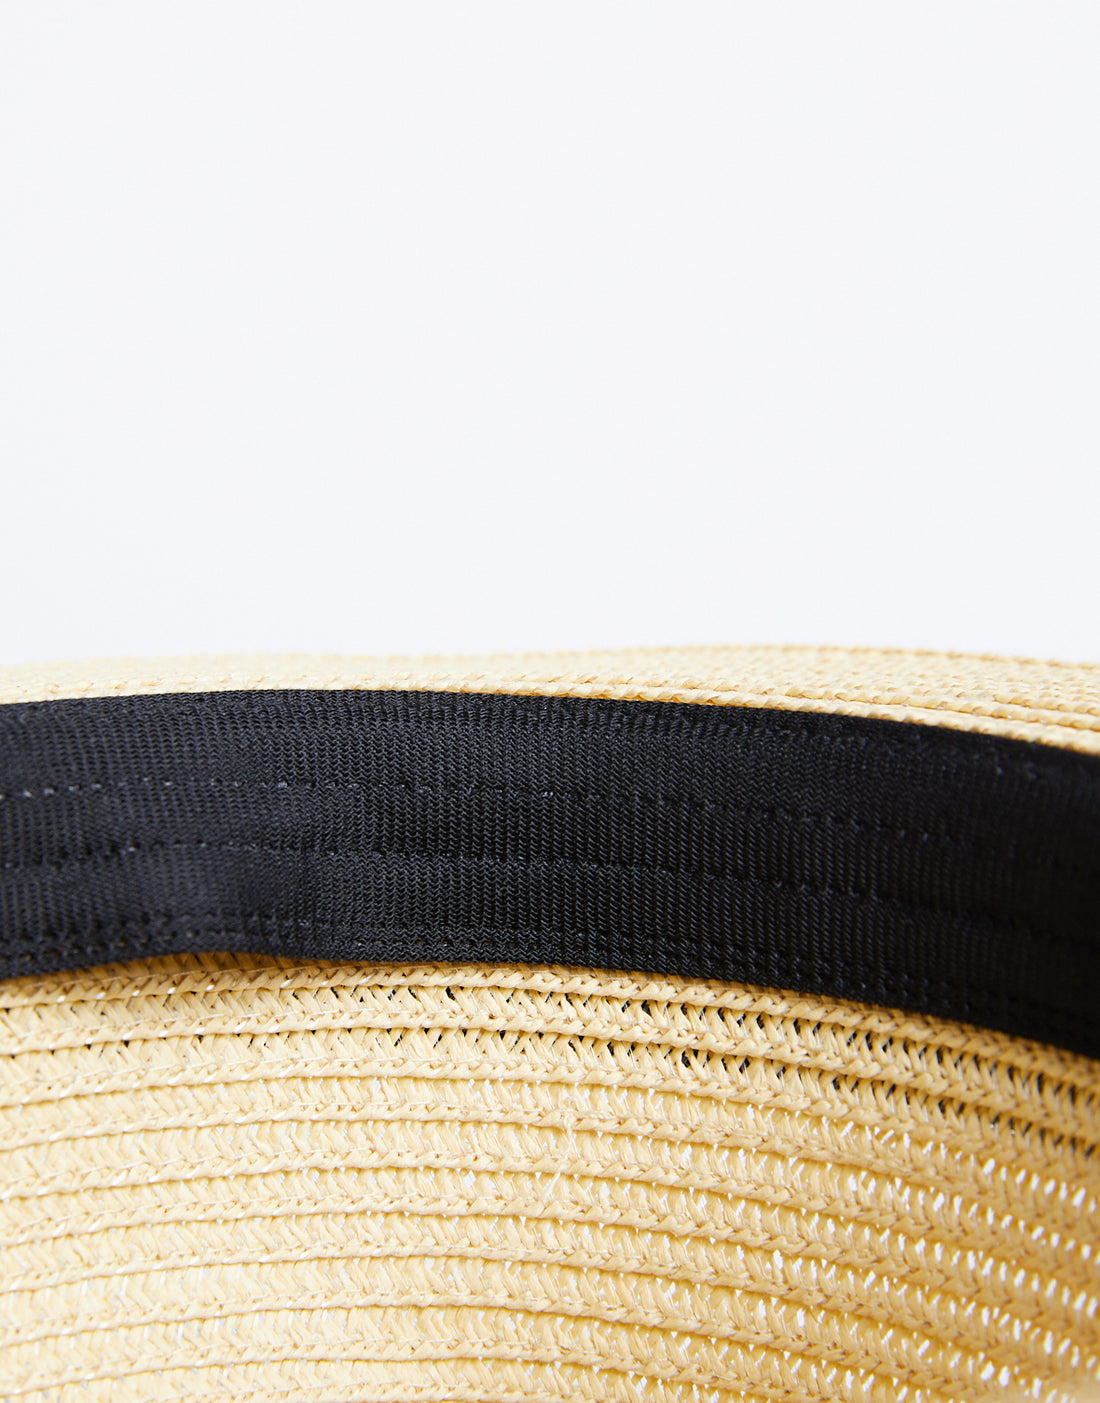 Beach Please Straw Hat Accessories Beige One Size -2020AVE